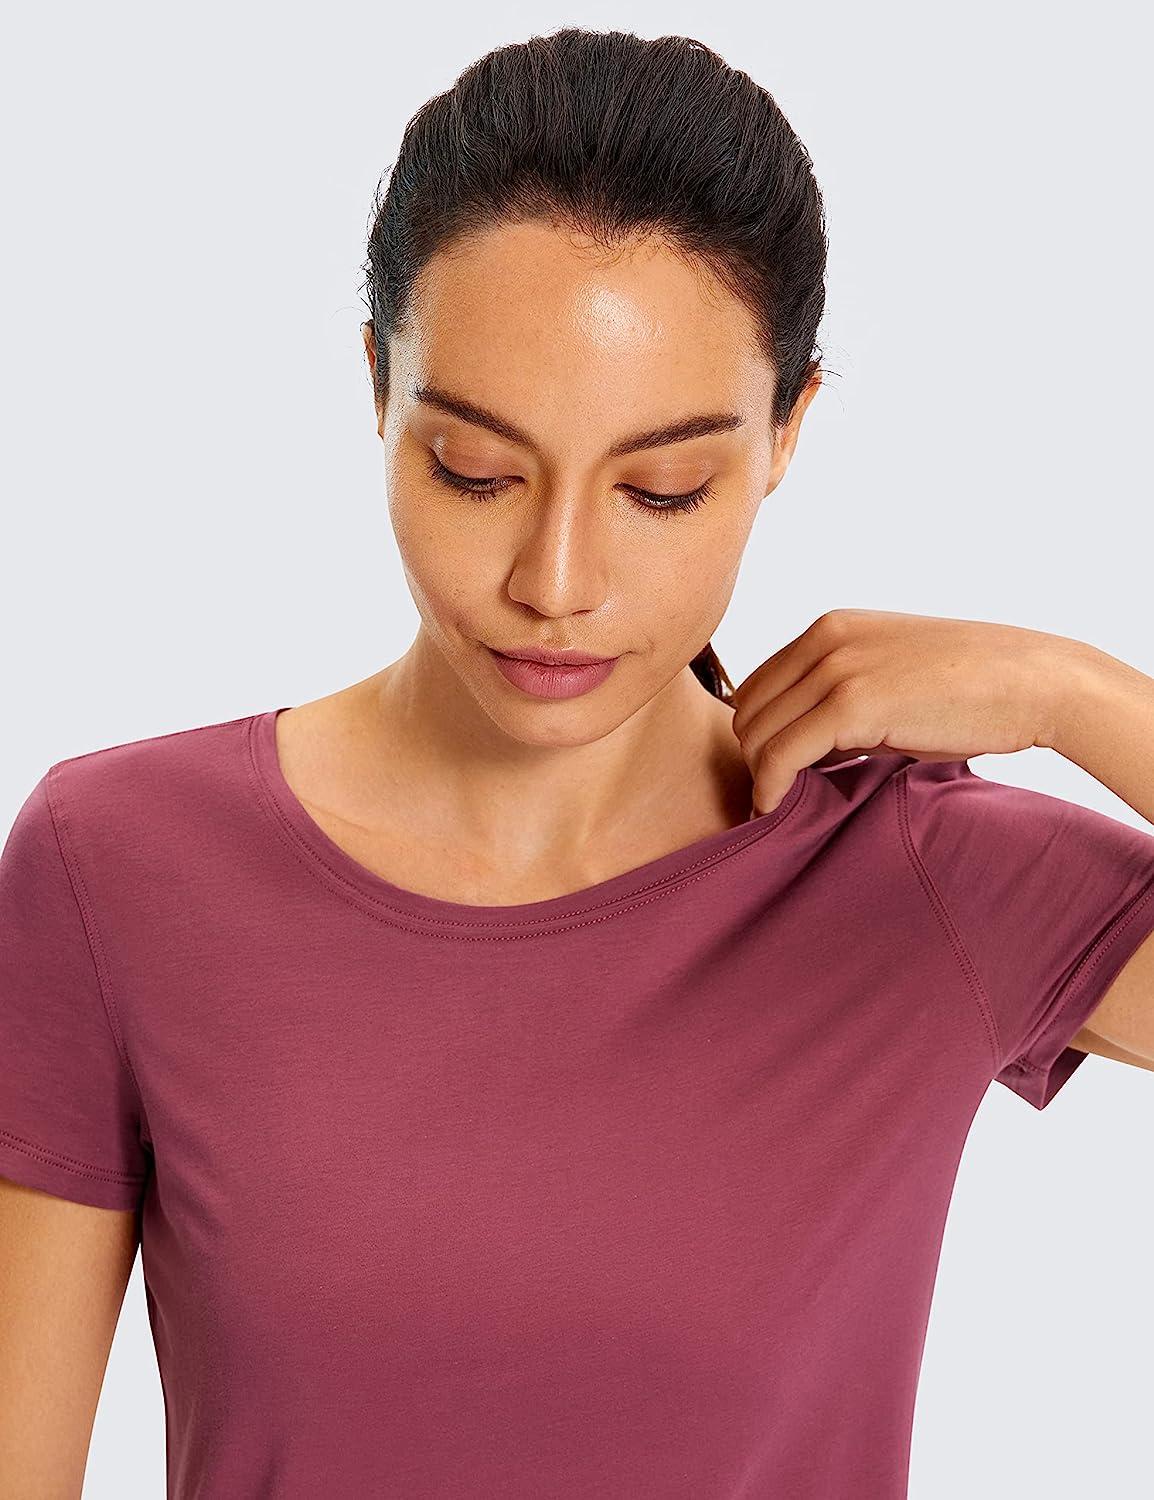 CRZ YOGA Women's Pima Cotton Short Sleeve Workout Shirt Yoga T-Shirt Tee Top